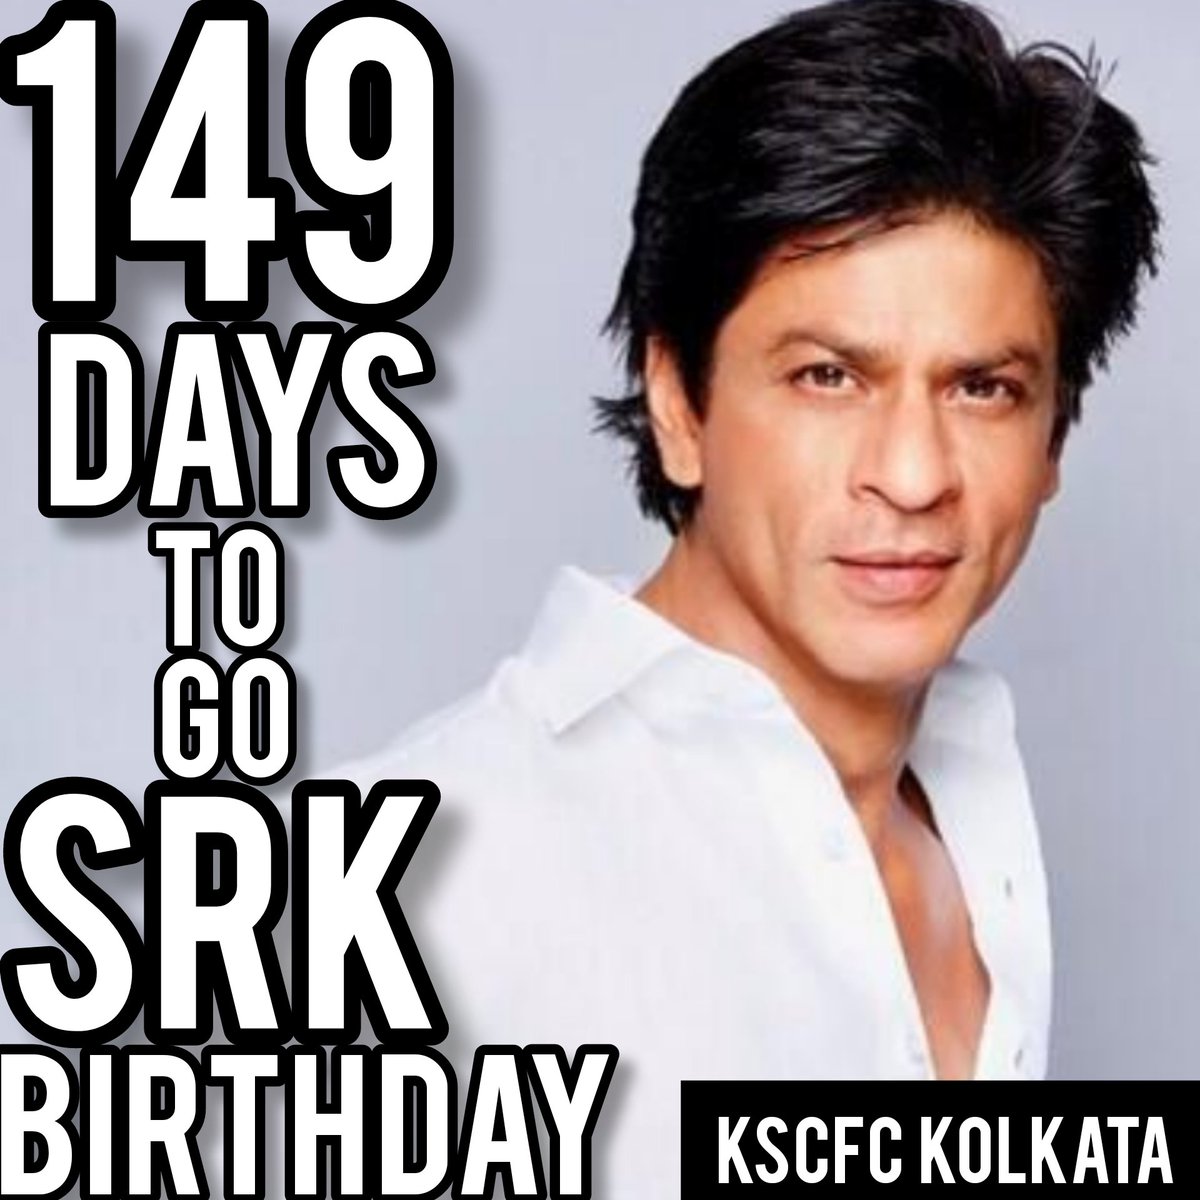 COUNTDOWN IS ON MORE 149 DAYS TO GO FOR KING KHAN BIRTHDAY CELEBRATION @iamsrk @kolkata_srk @KarunaBadwal @RedChilliesEnt @pooja_dadlani @khyatimadaan @BilalS158 #AskSRK #kingkhan #Myntra #ShahRukhKhan𓀠 #SRK